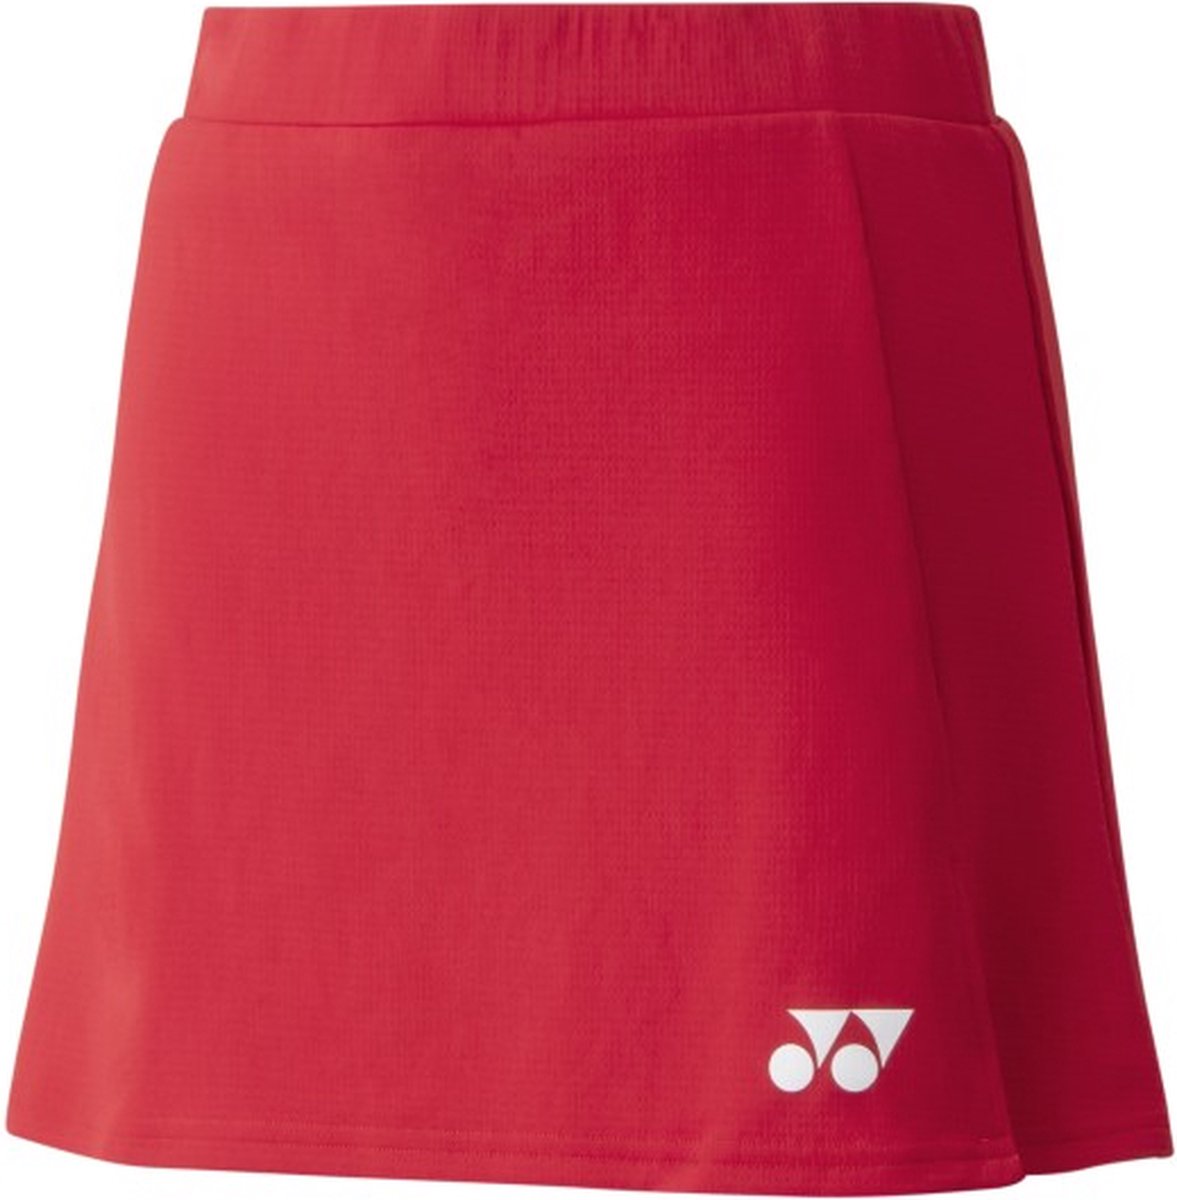 Yonex badminton tennis skirt / sportrok 26088 - rood - maat L